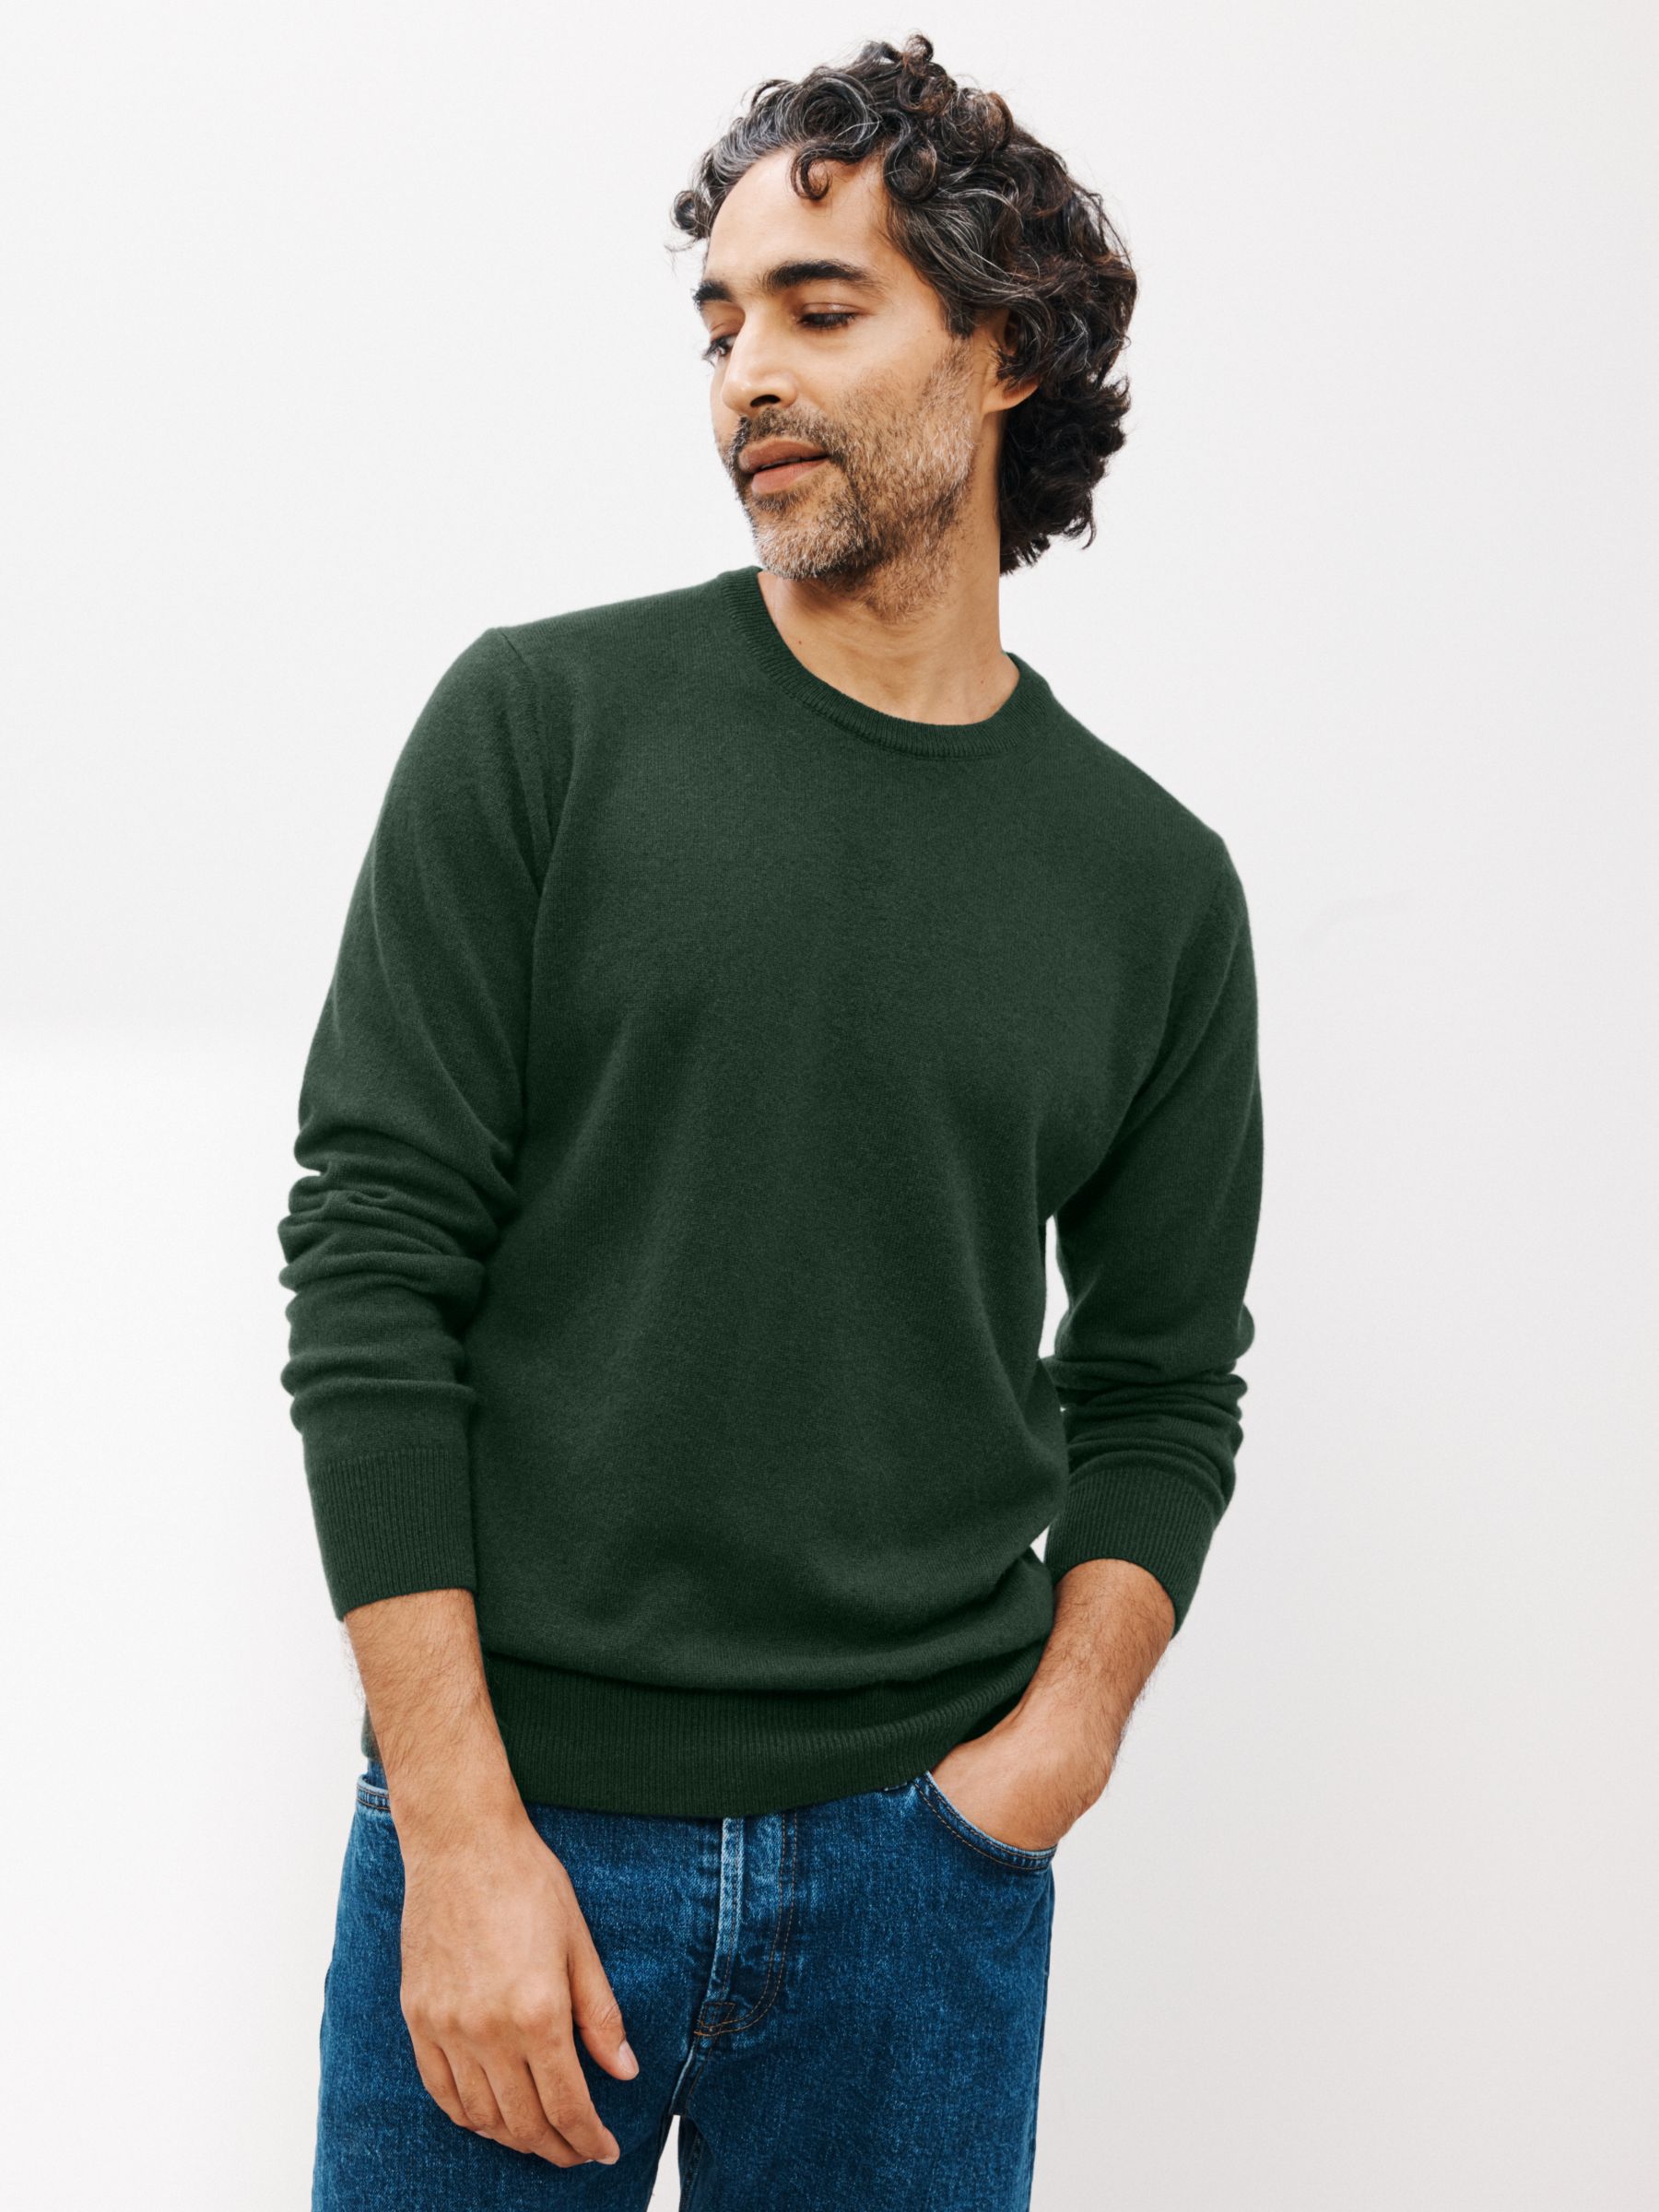 Beige M Selected jumper discount 79% MEN FASHION Jumpers & Sweatshirts Elegant 